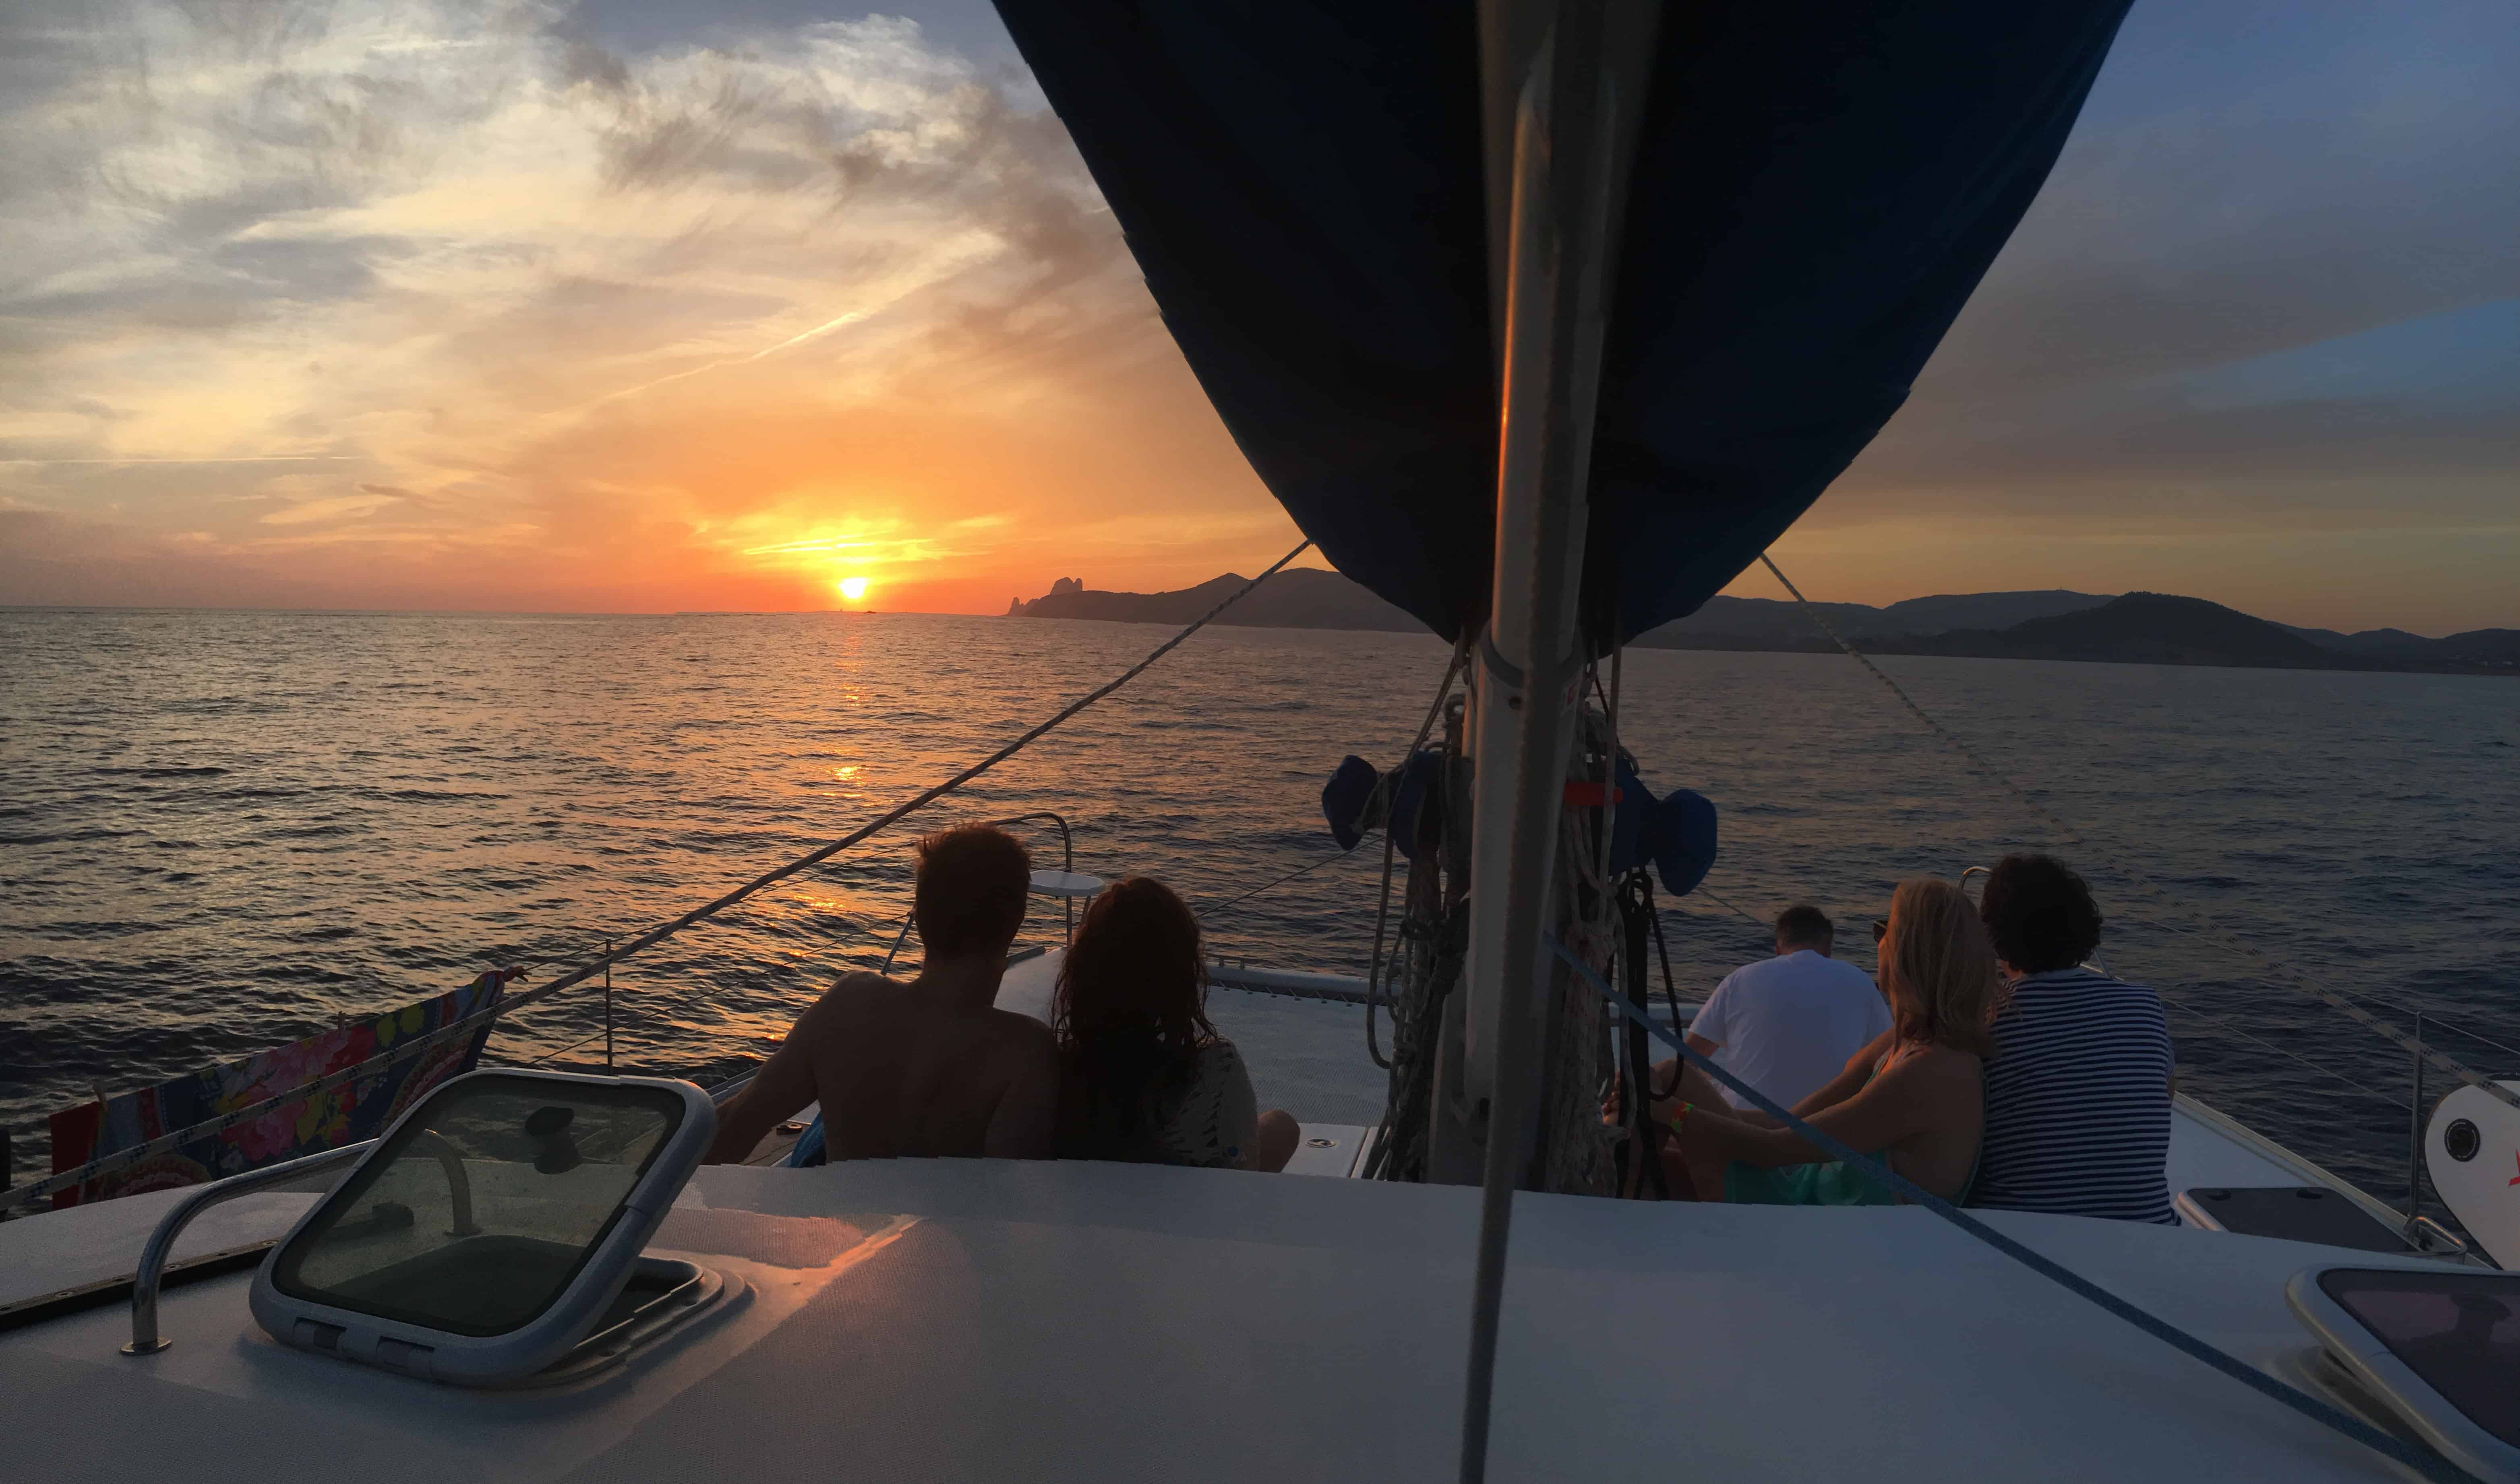 Catamaran for rent Ibiza, people enjoying the sunset on board